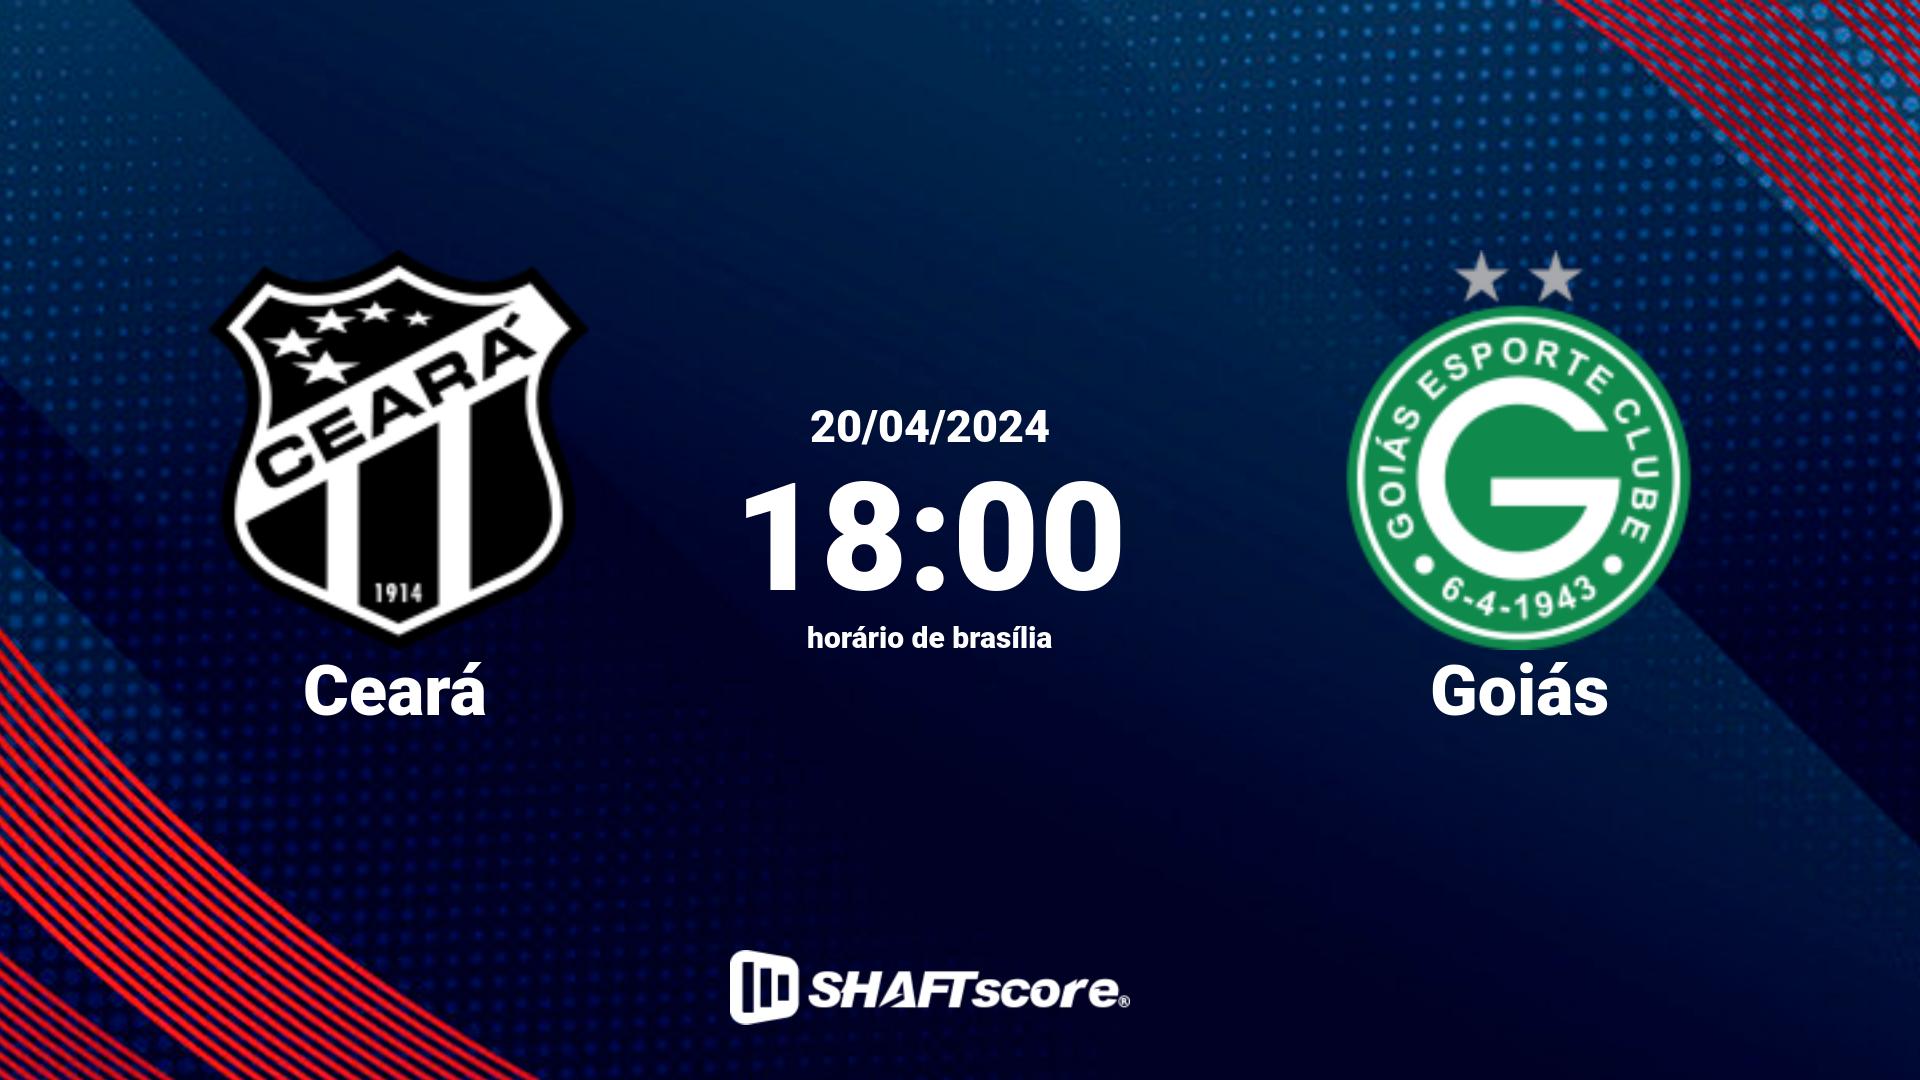 Estatísticas do jogo Ceará vs Goiás 20.04 18:00